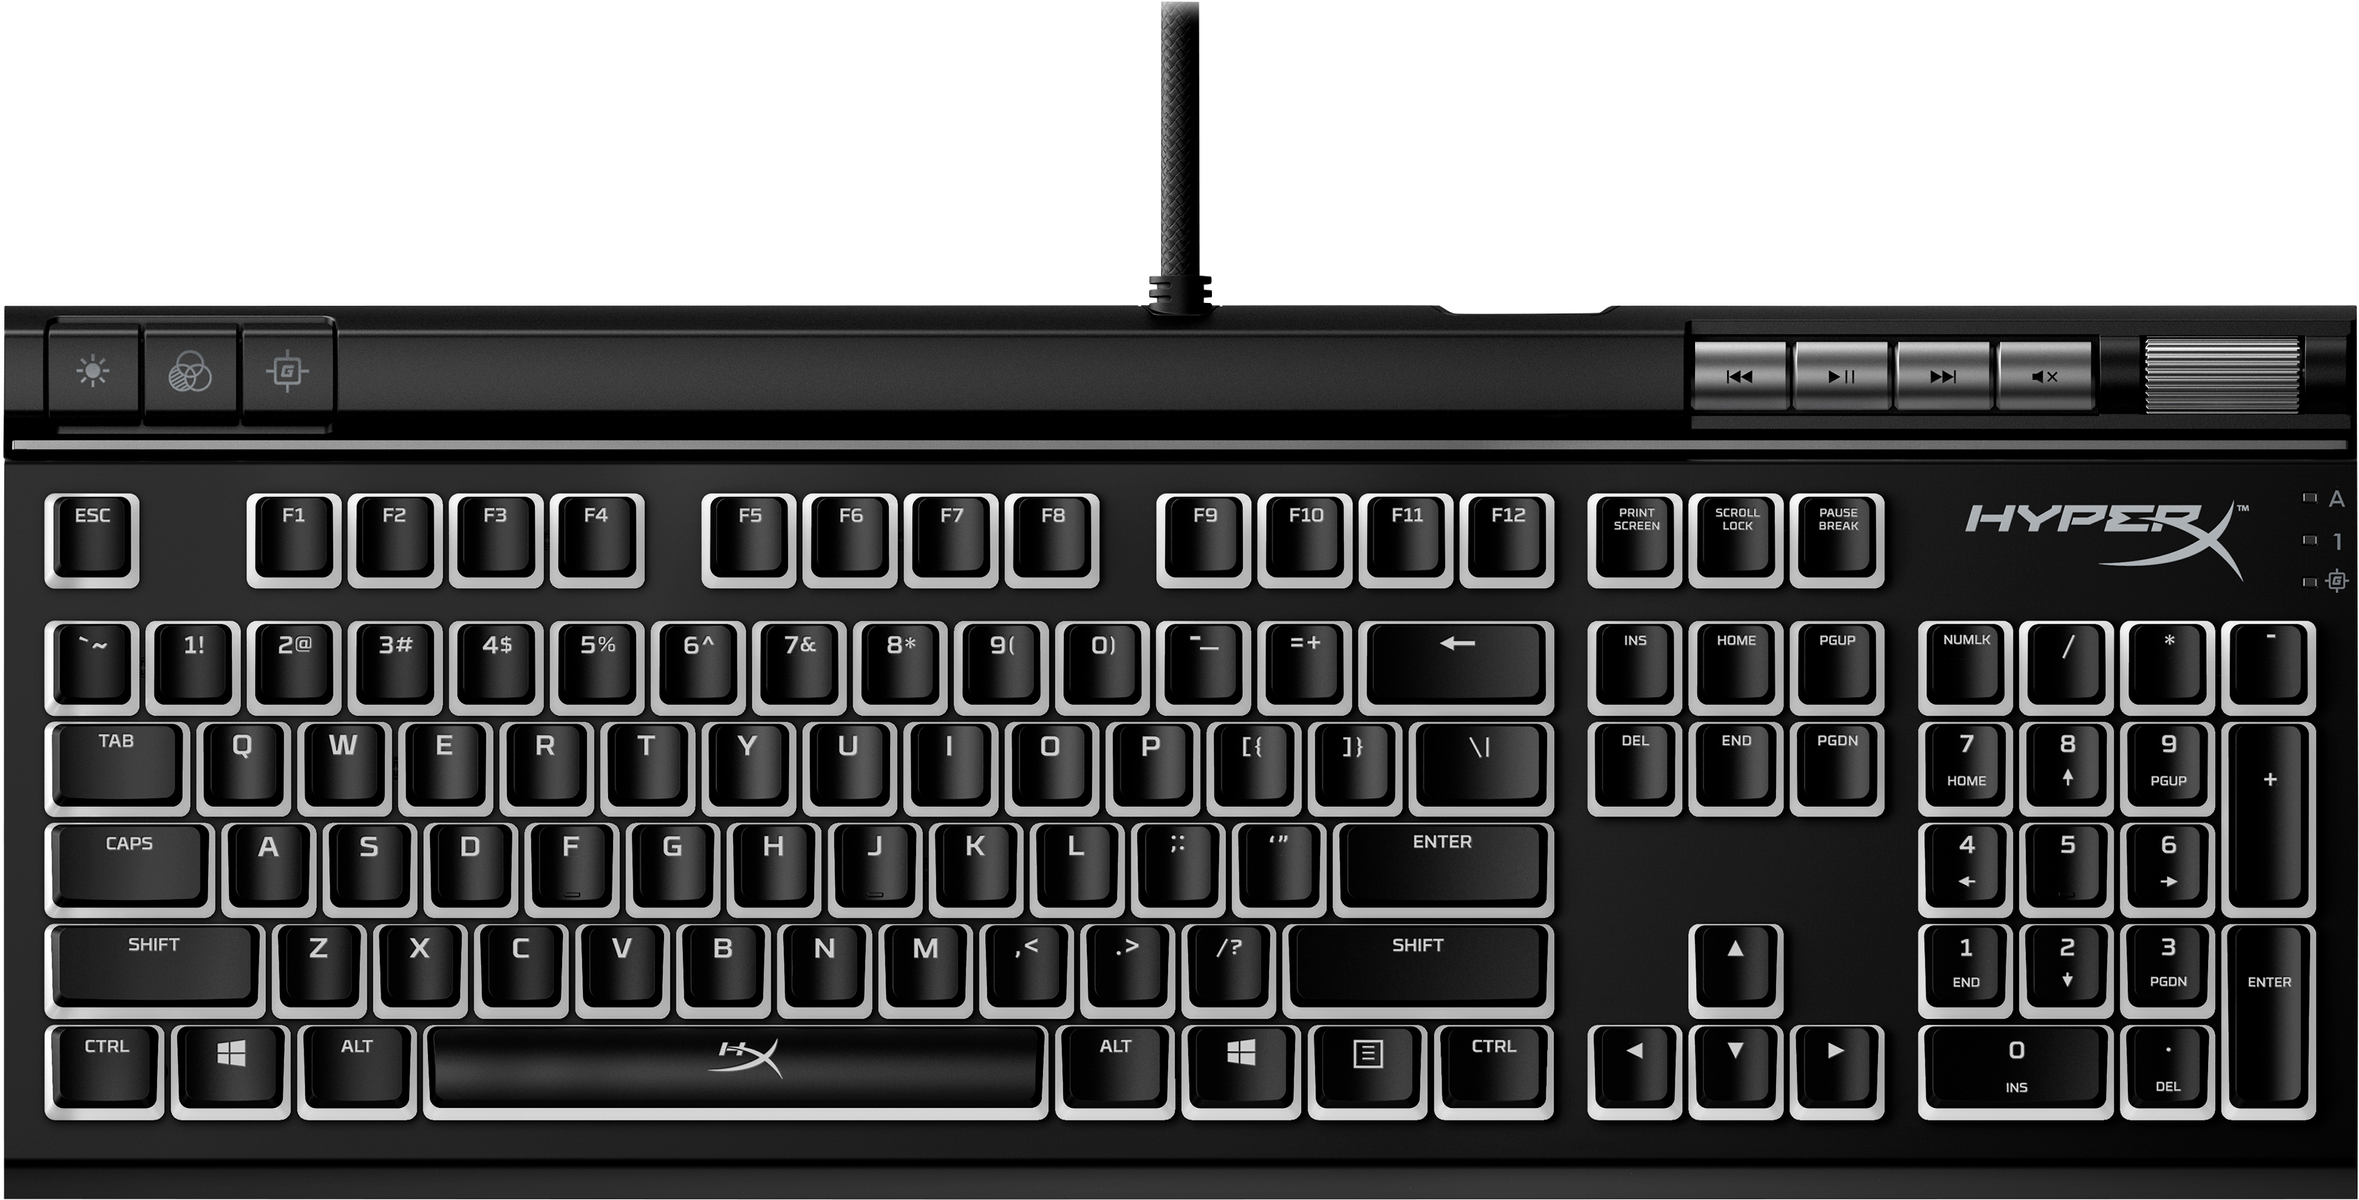 KINGSTON HKBE2X-1X-US/G, Gaming Tastatur